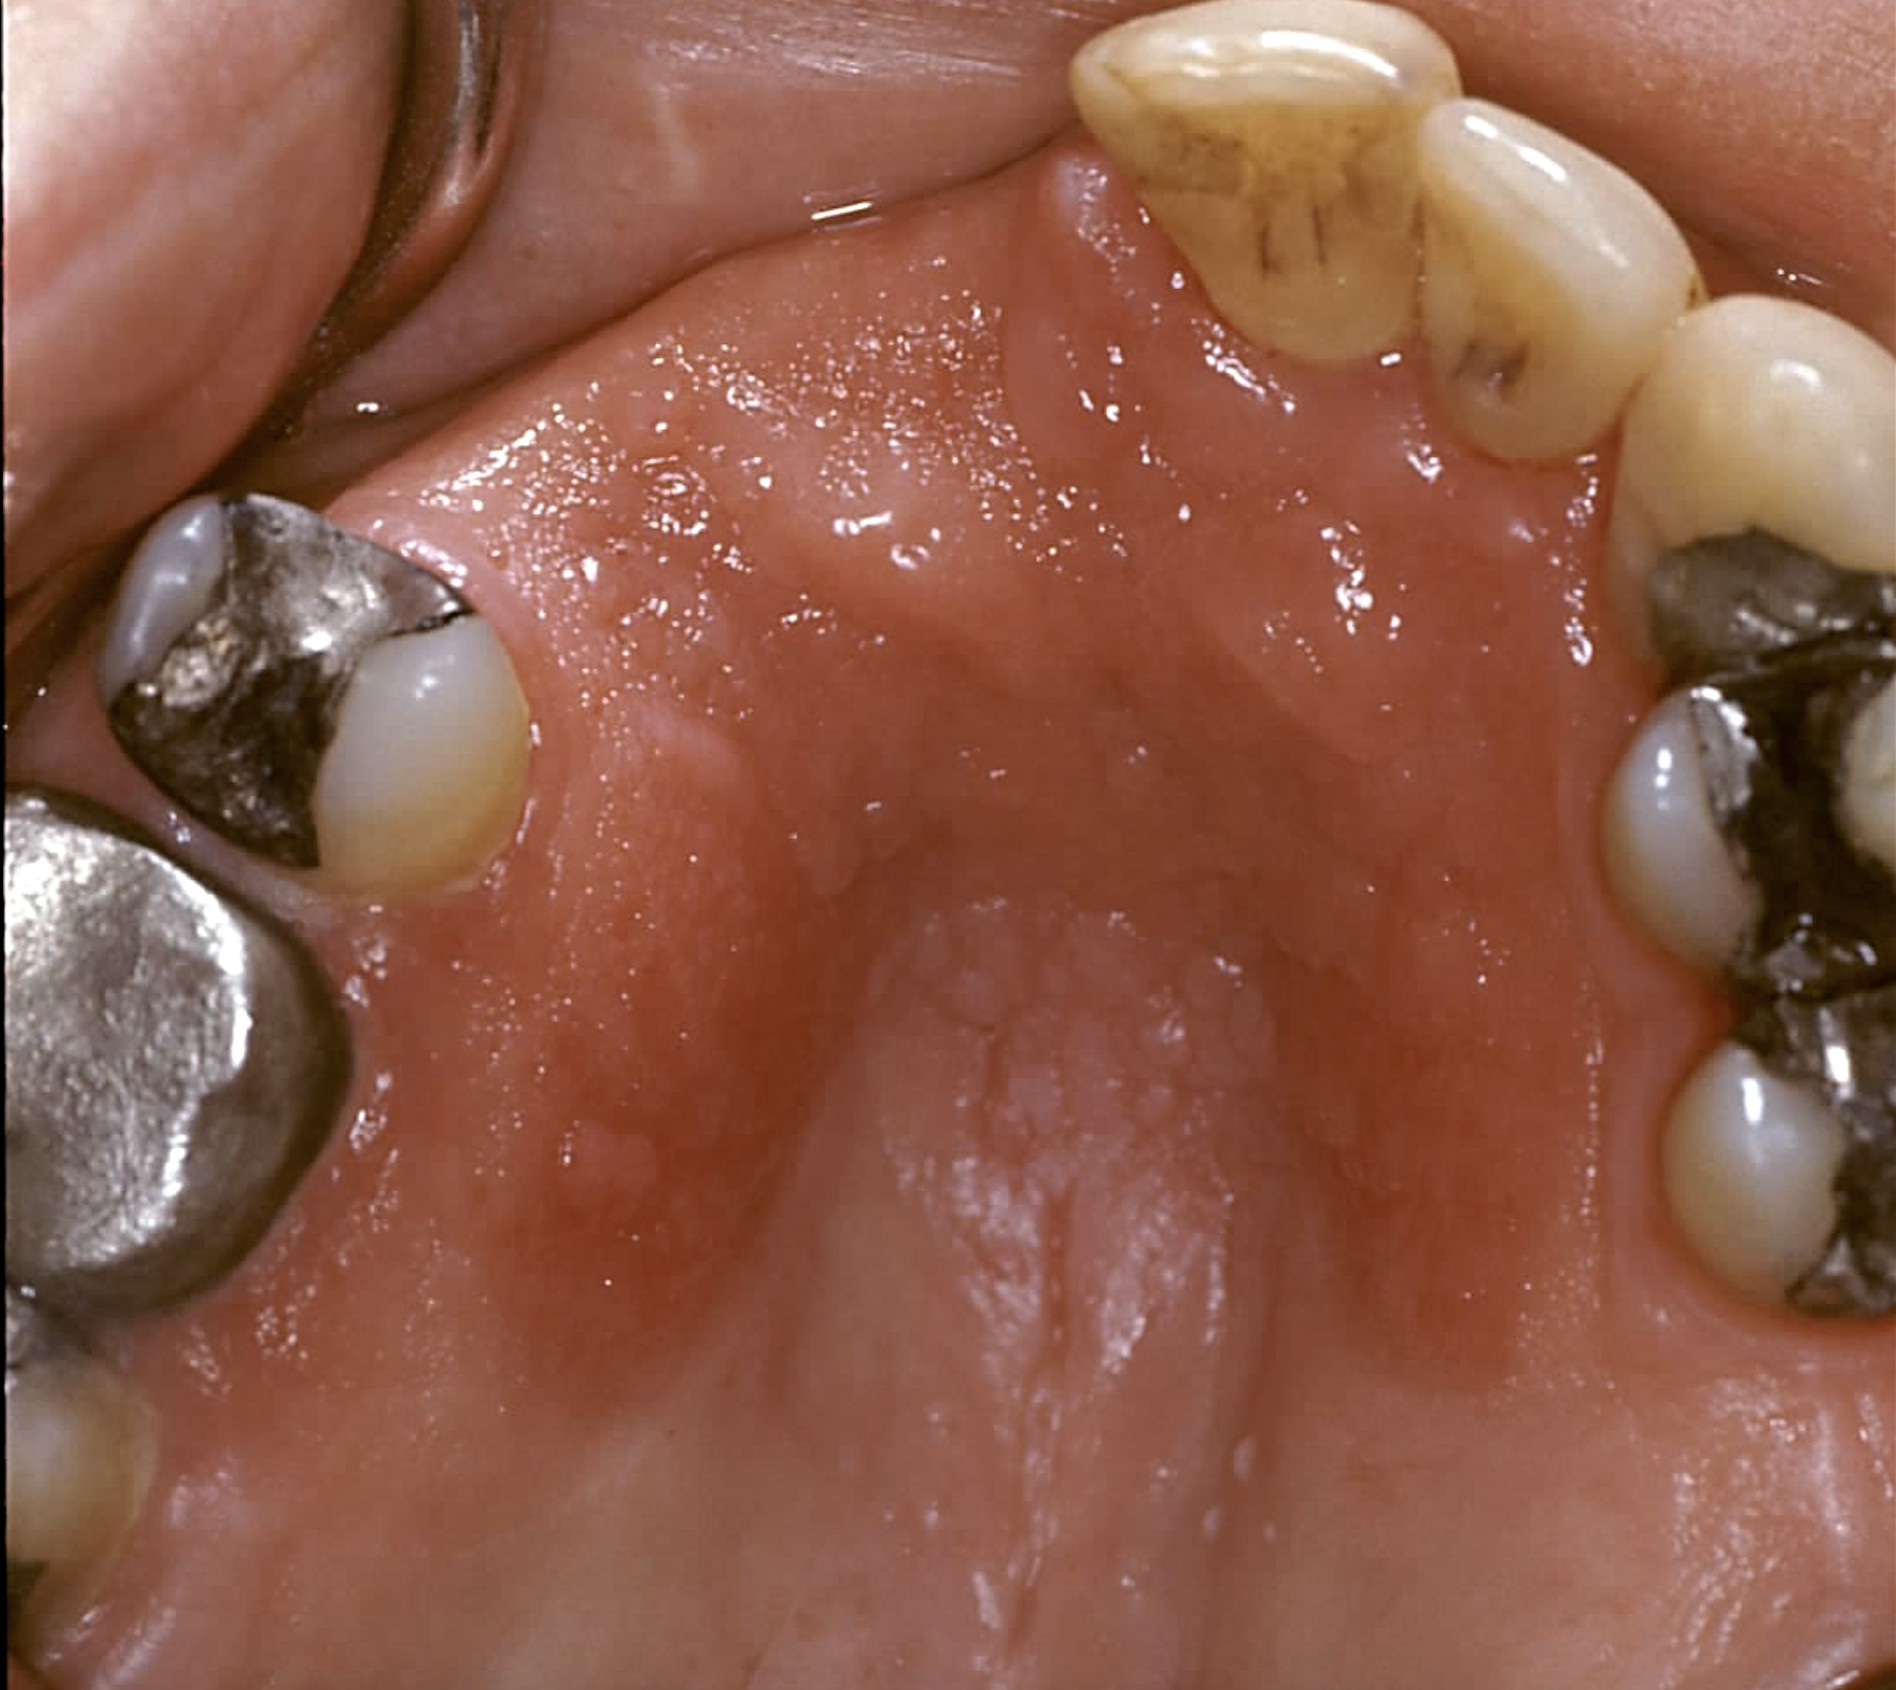 Inflammatory papillary hyperplasia noted on the hard palate of a denture wearer